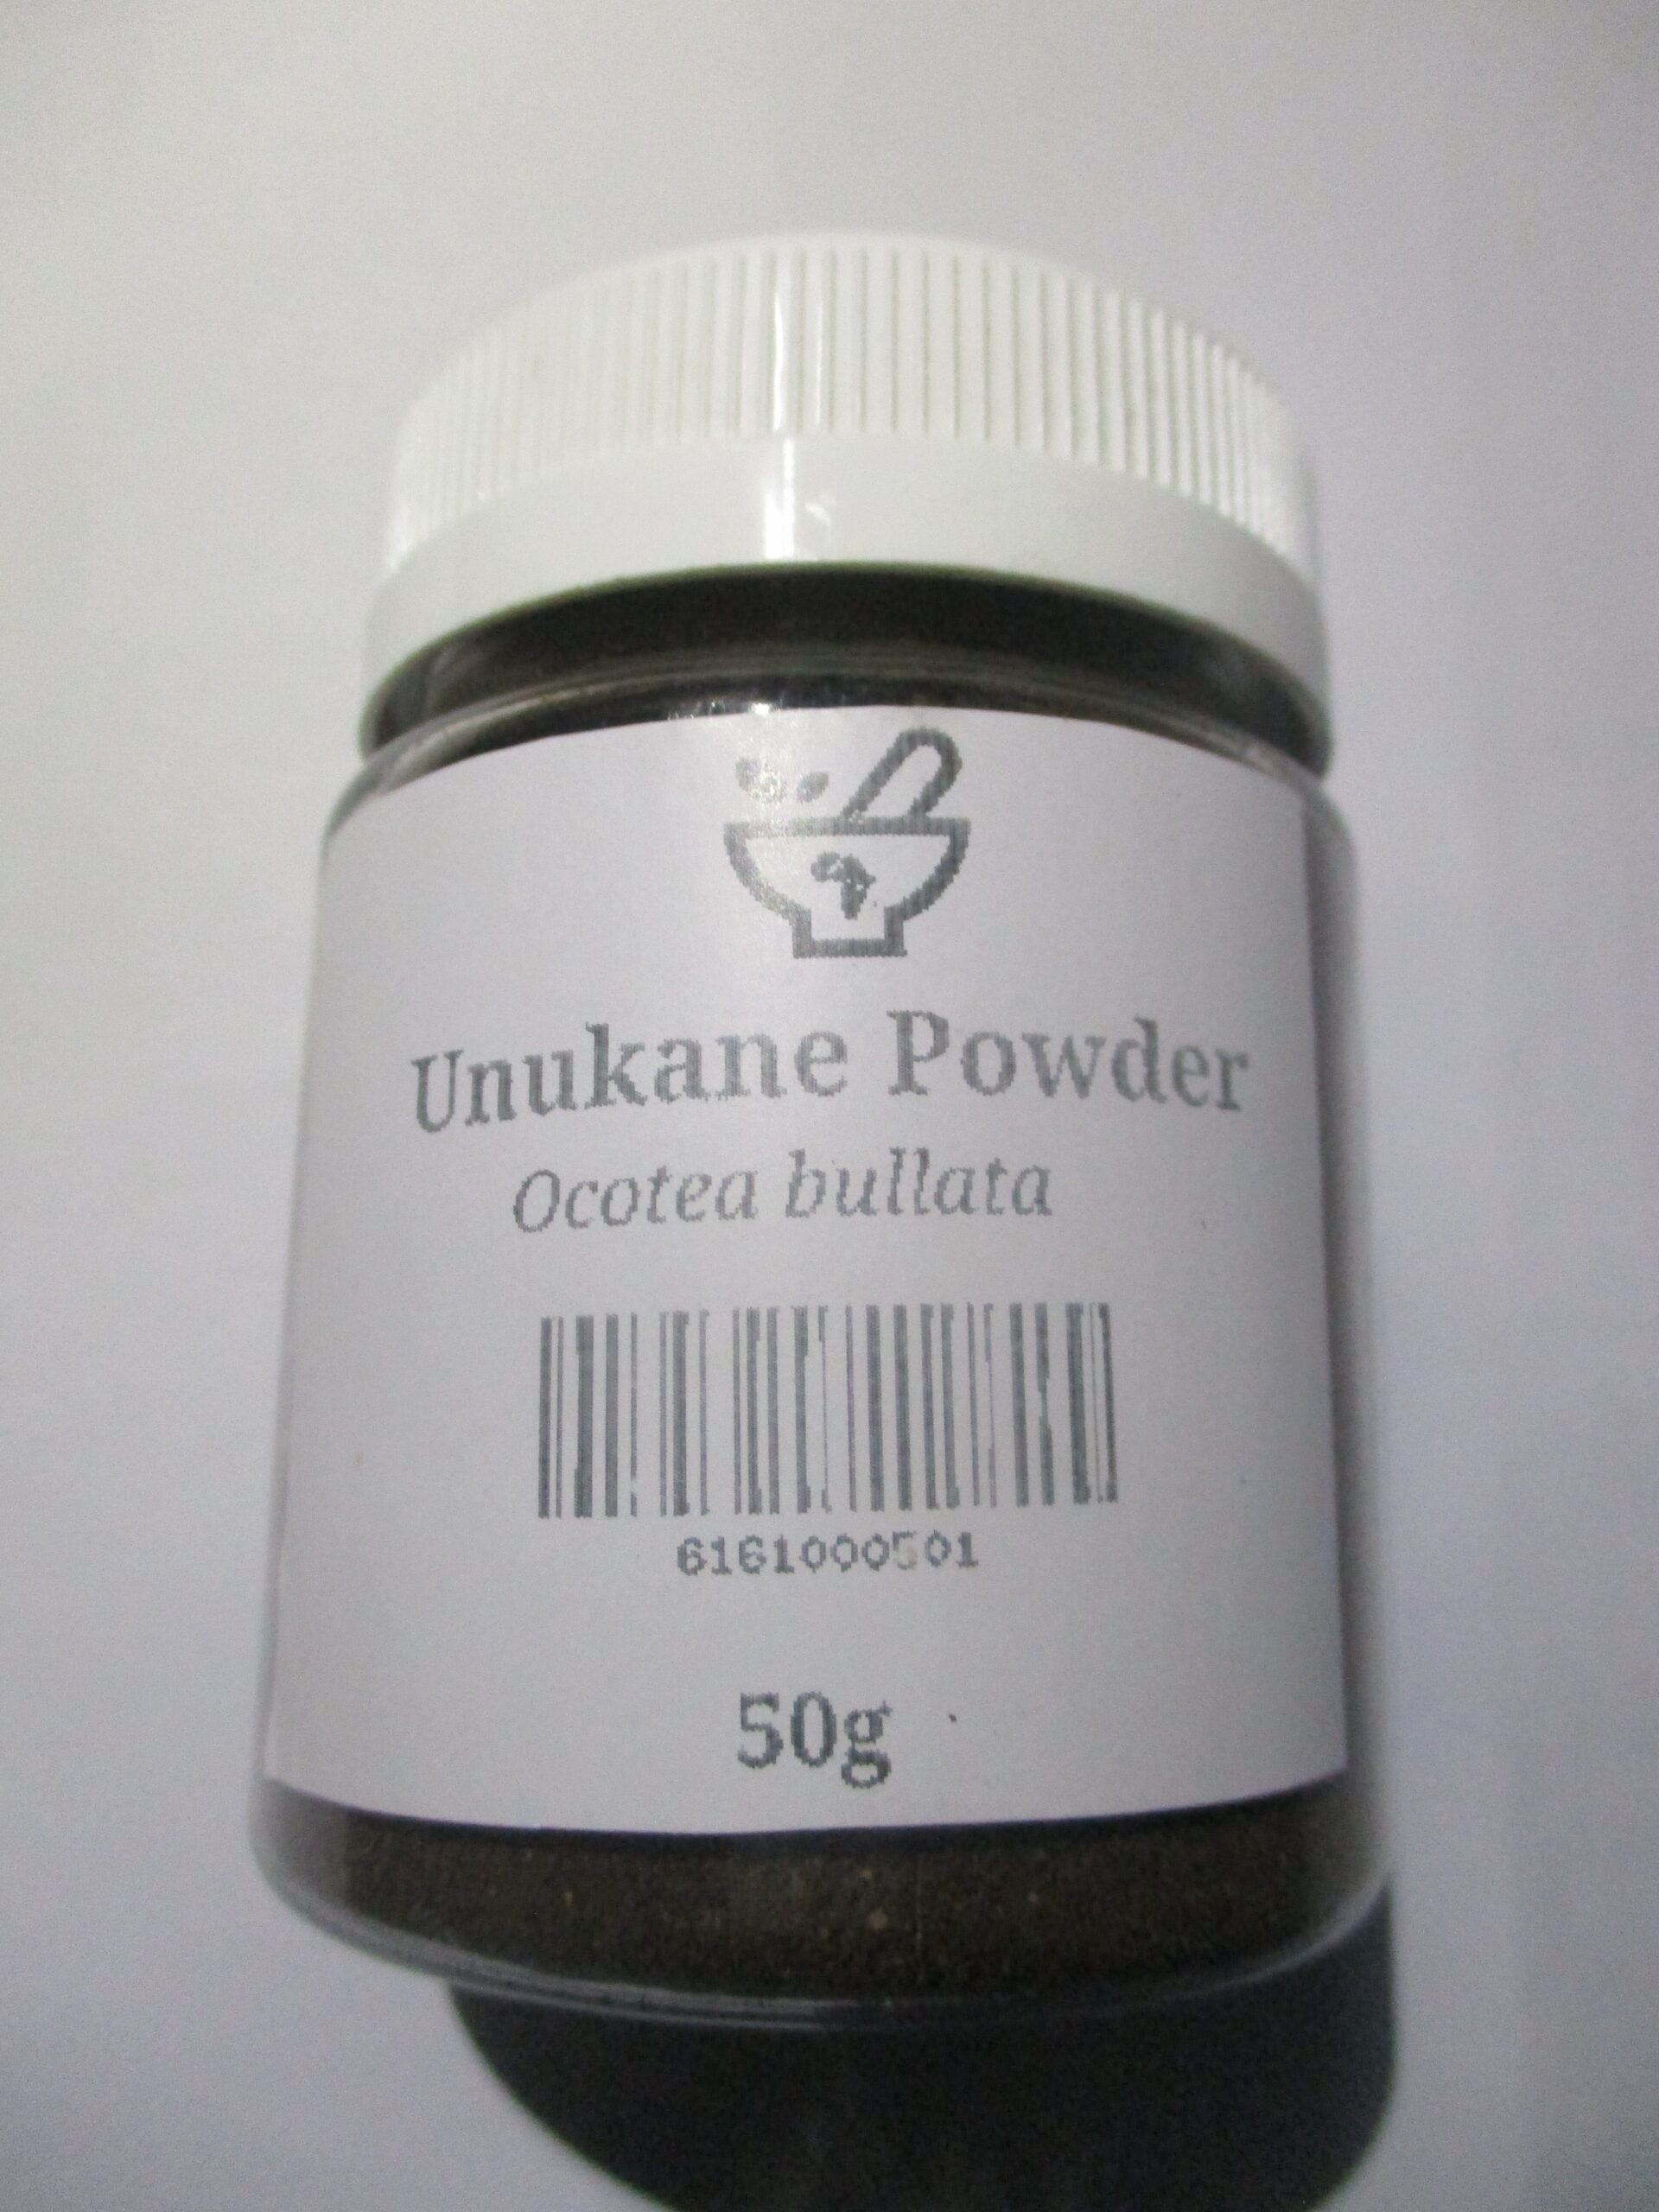 Unukane powder